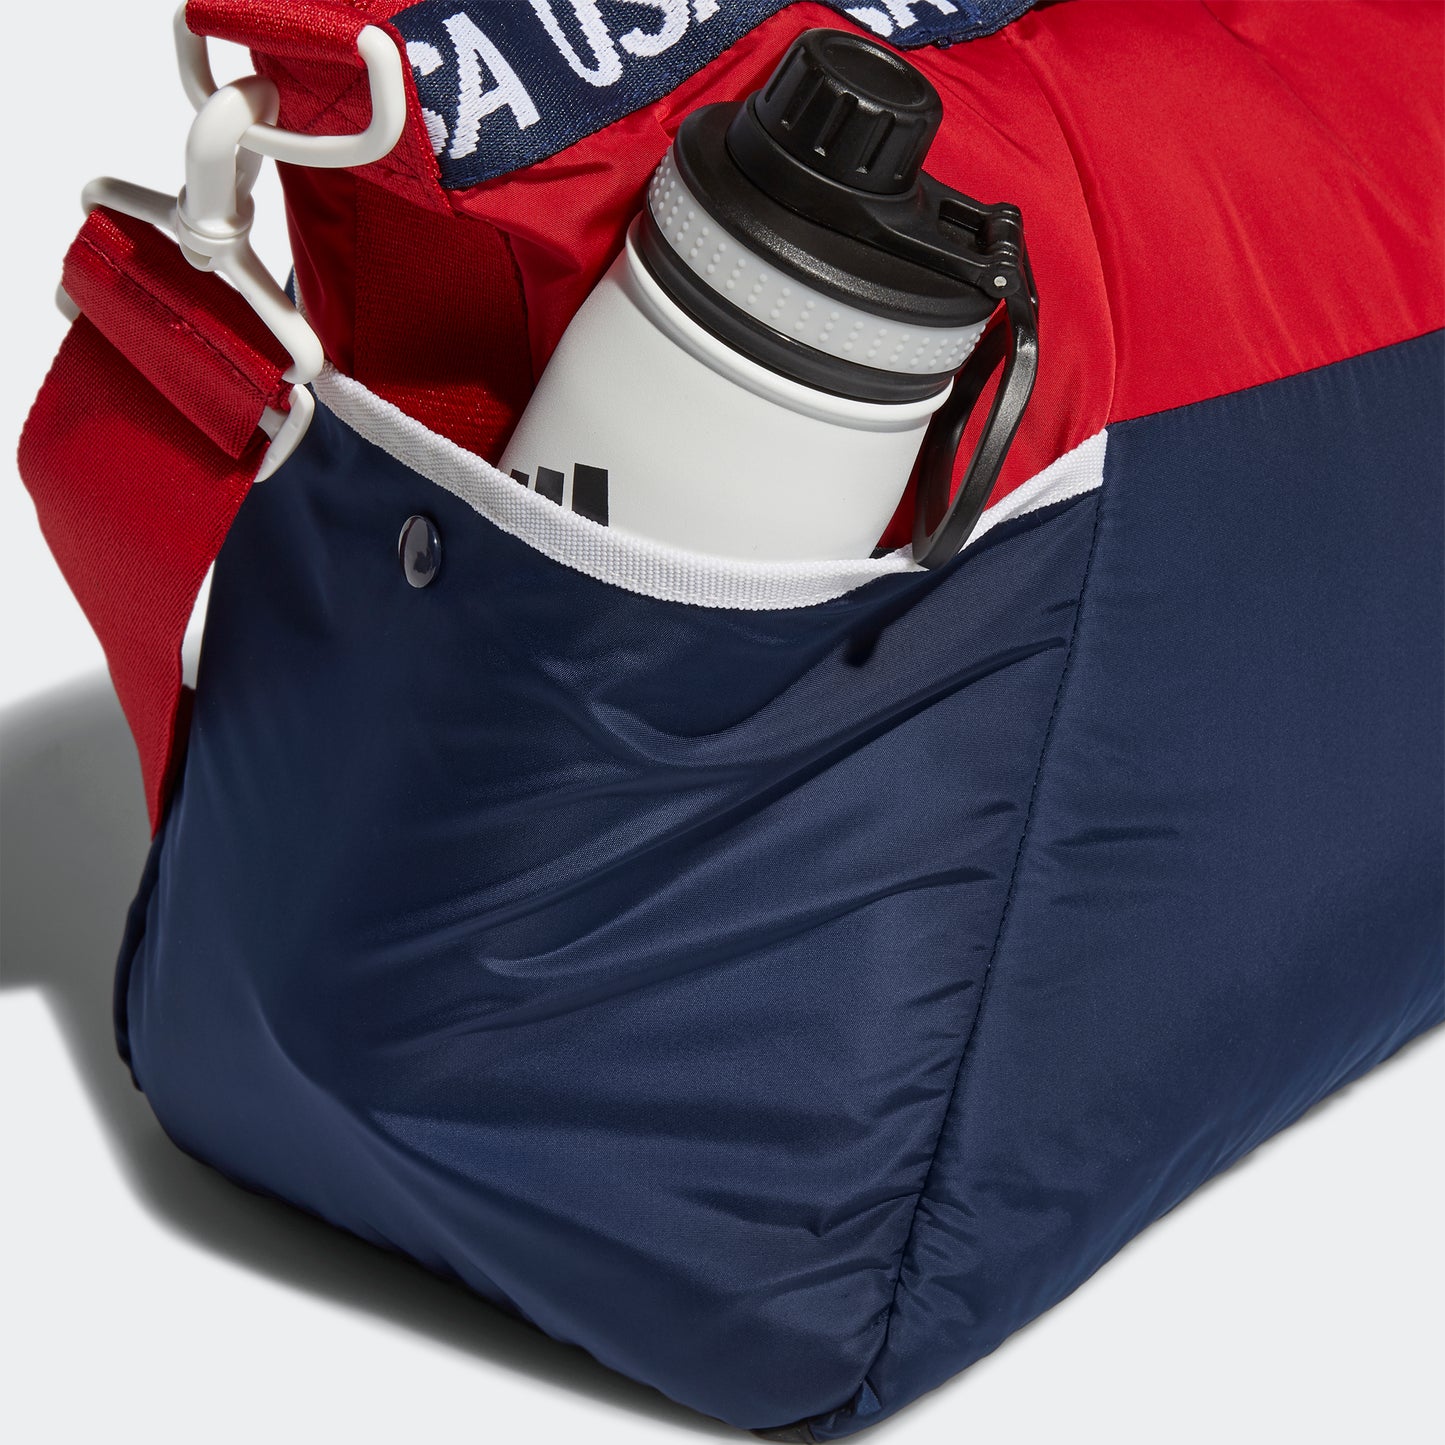 adidas USA VOLLEYBALL STUDIO III Duffel Bag | Red-White-Blue